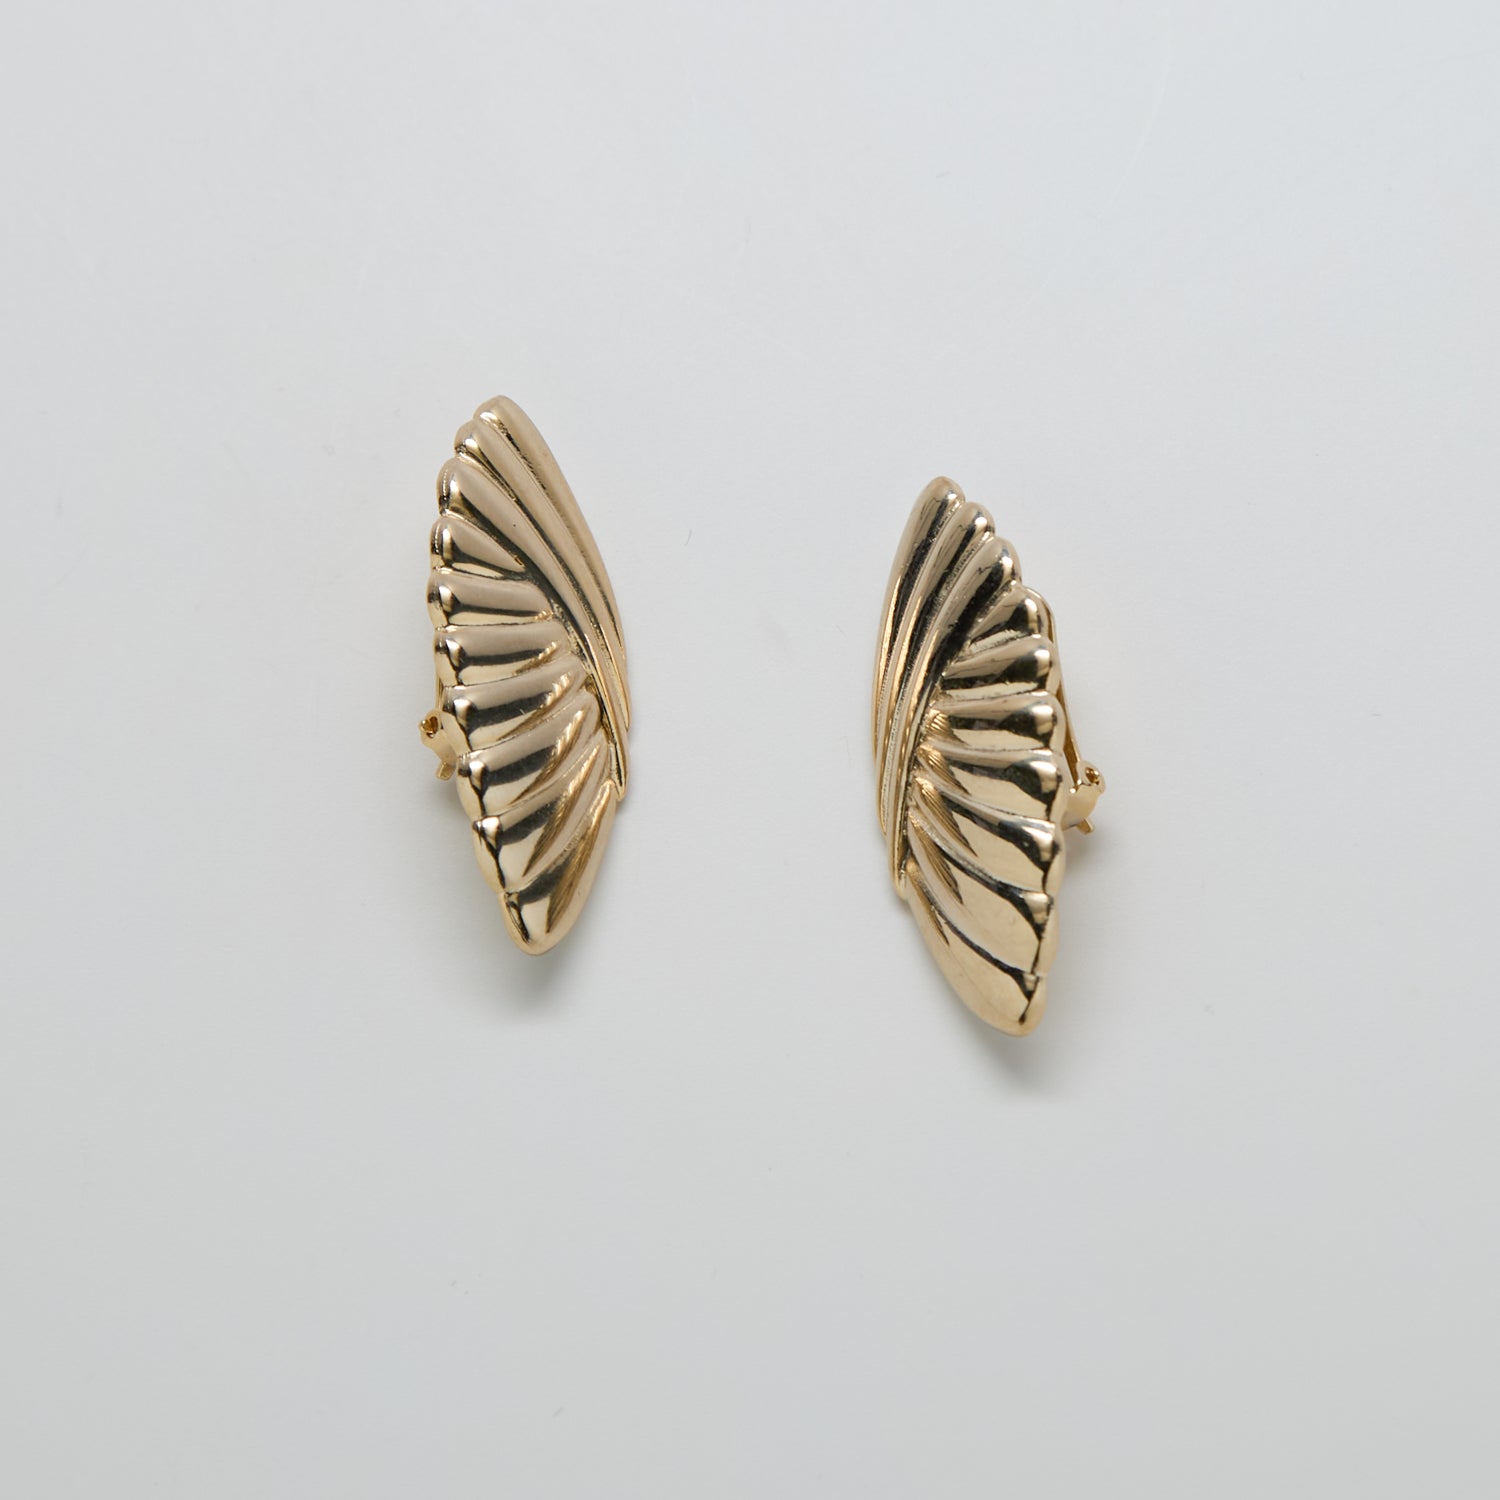 Vintage Art Deco Wing Earrings